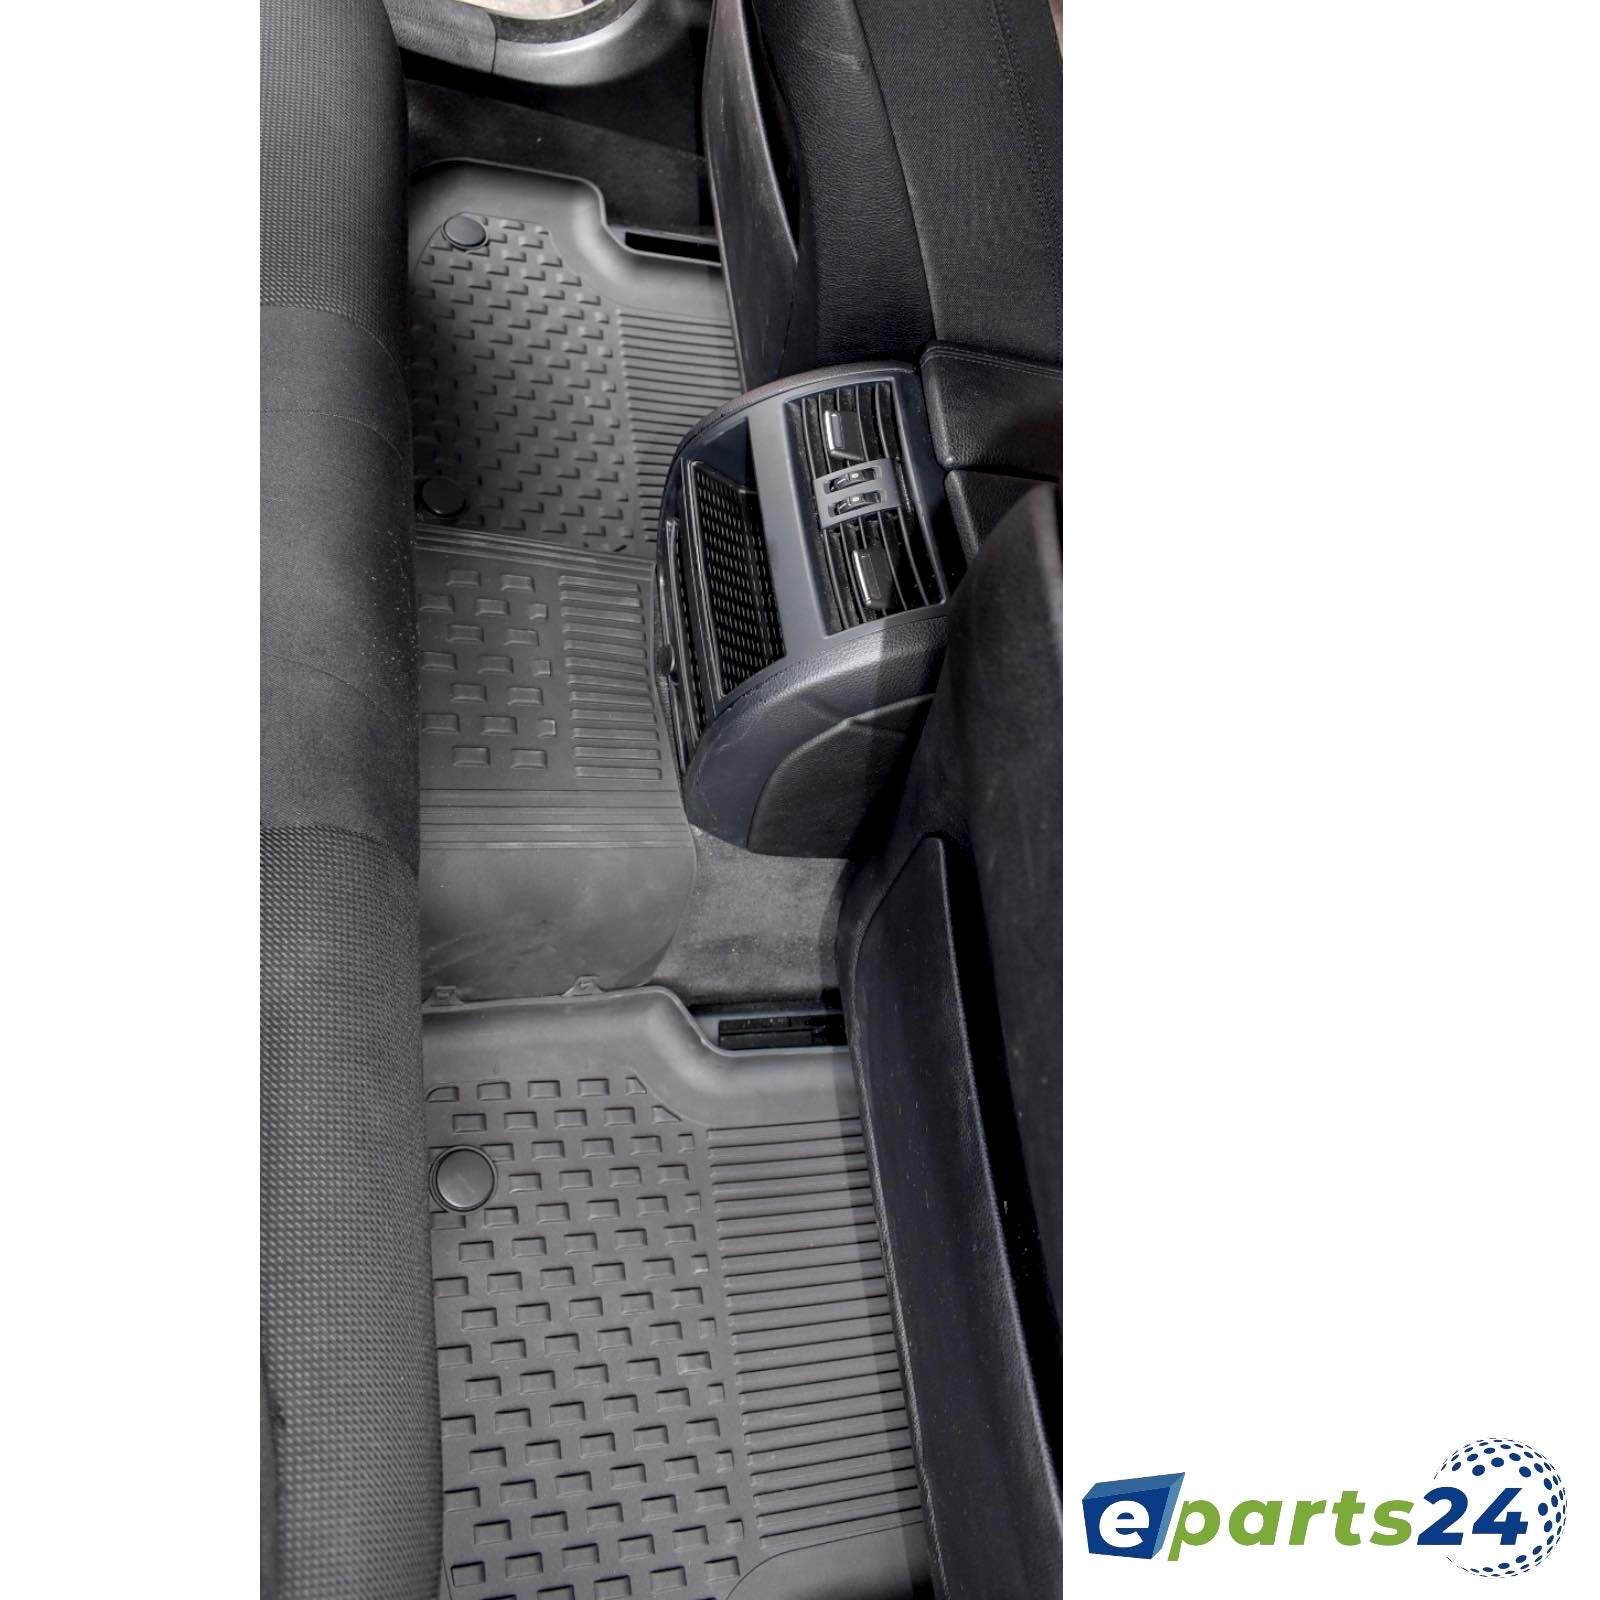 Fußmatten TPE E-Parts24 BMW F10 Limo 5er Premium – 5tlg Touring F11 für Automatten